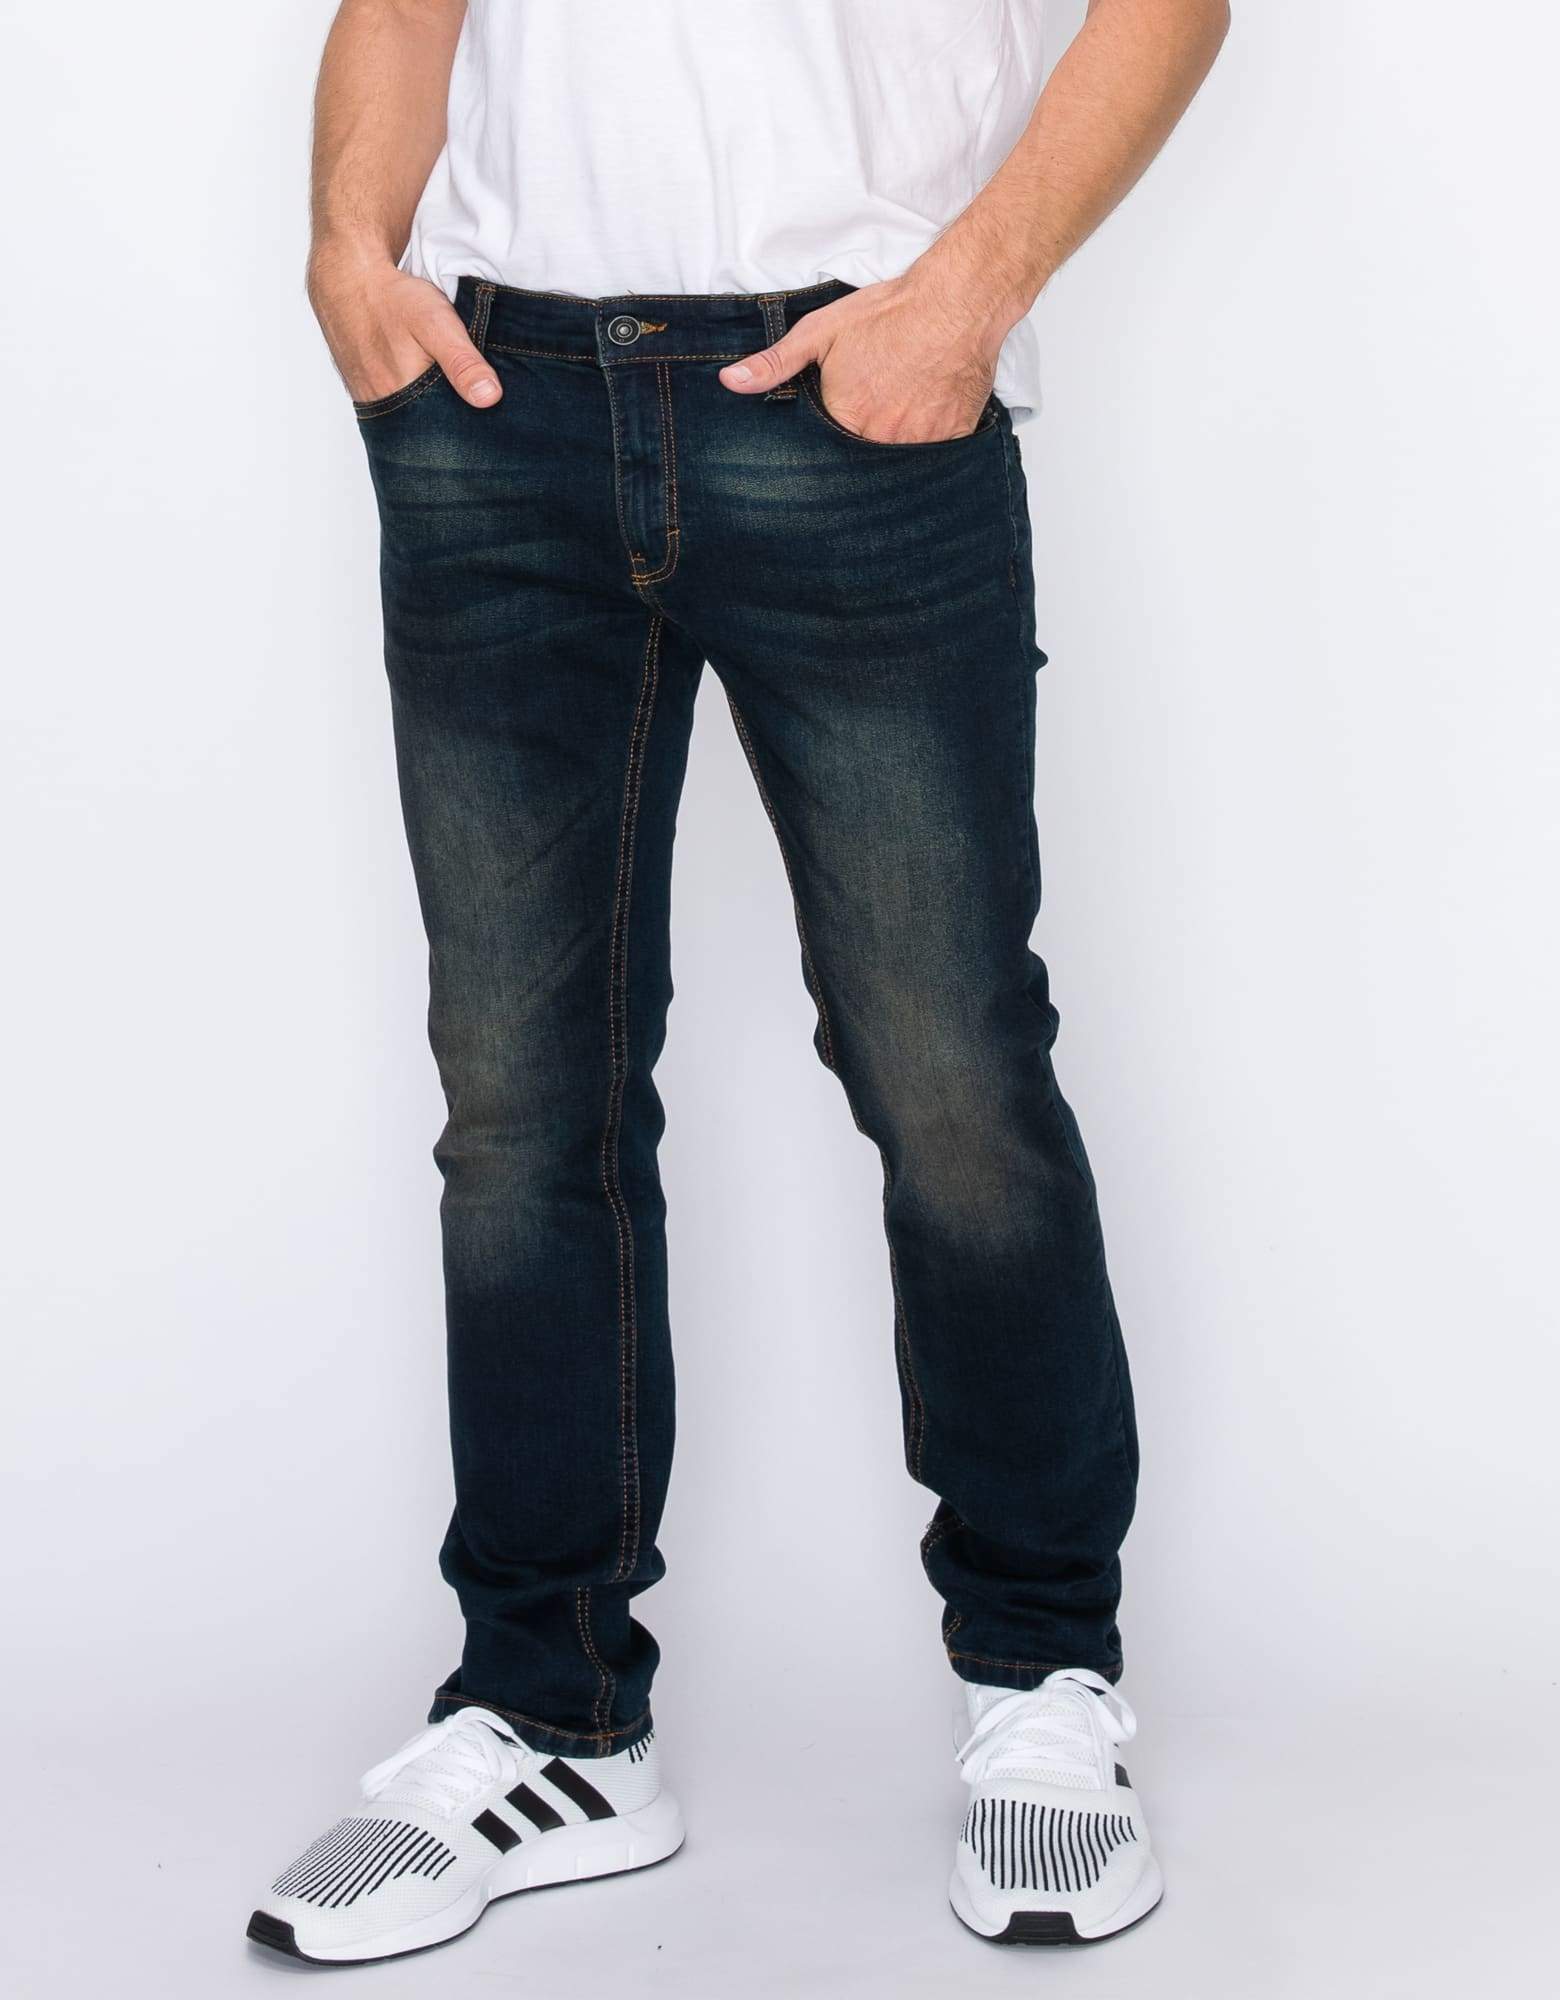 RING OF FIRE Men's 5 Pockets Slim Denim Stretch Jeans - image 3 of 6